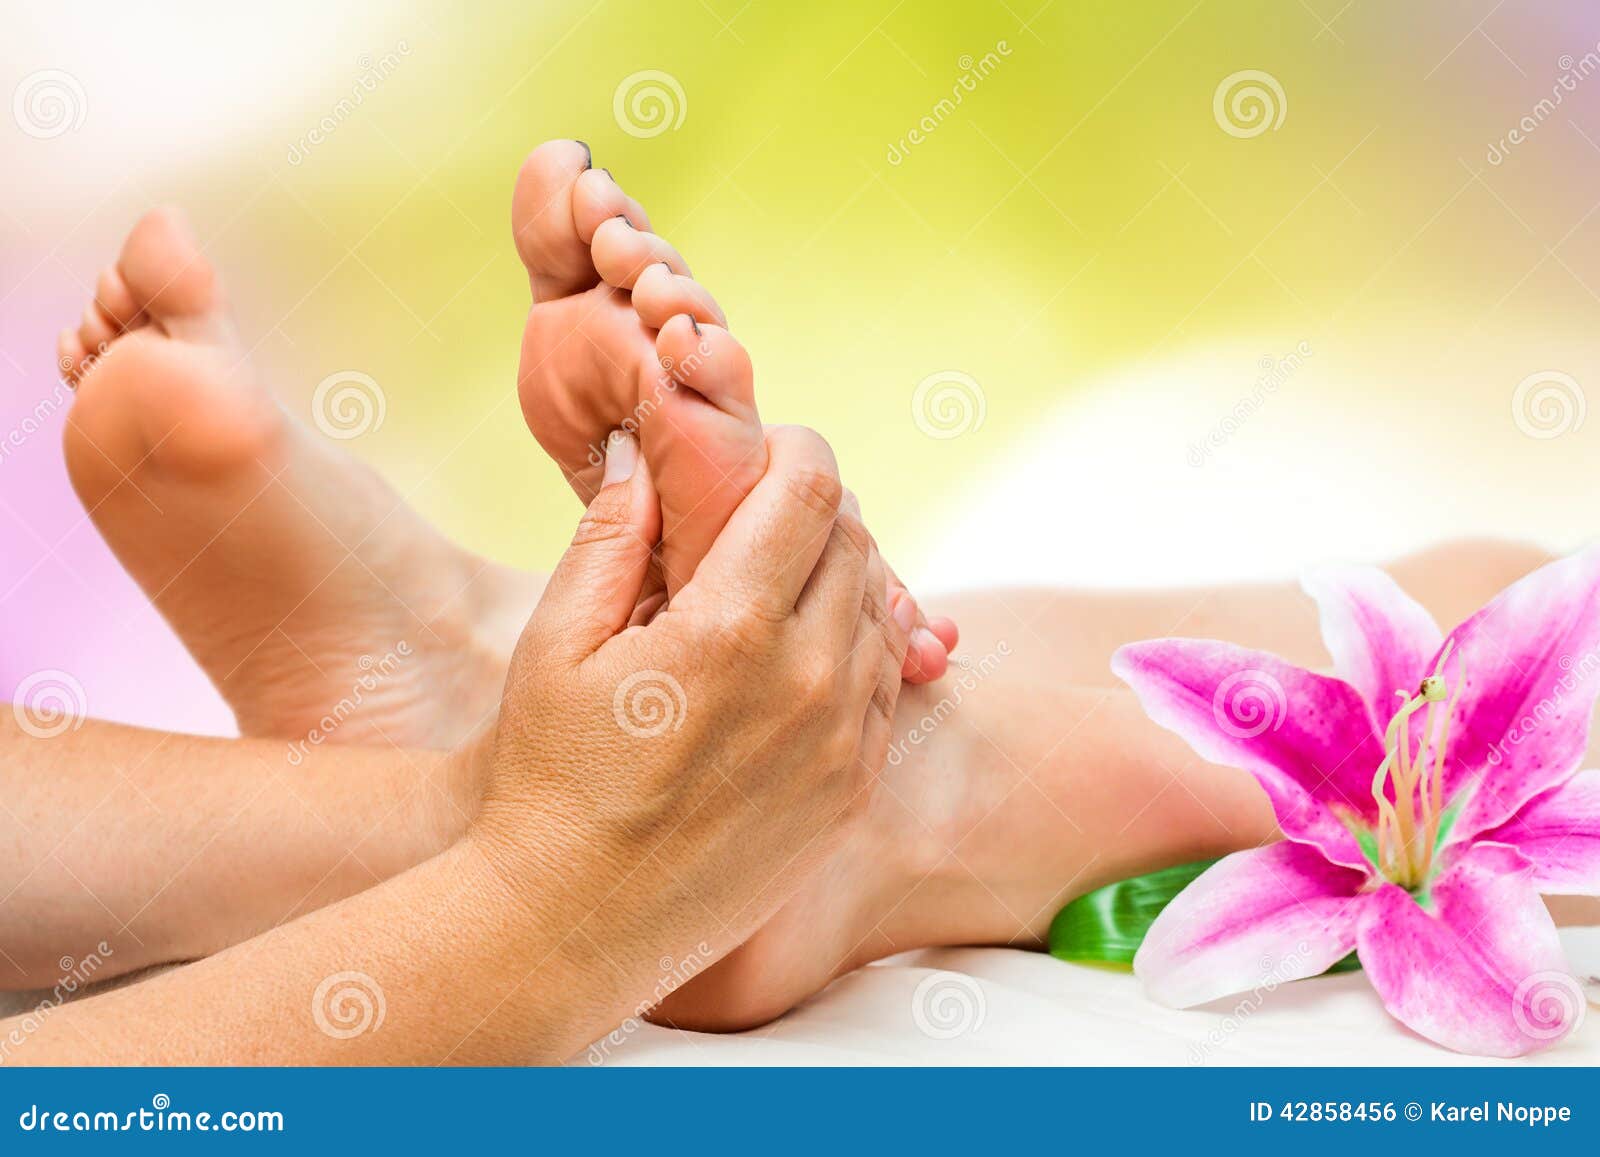 spa therapist doing foot massage